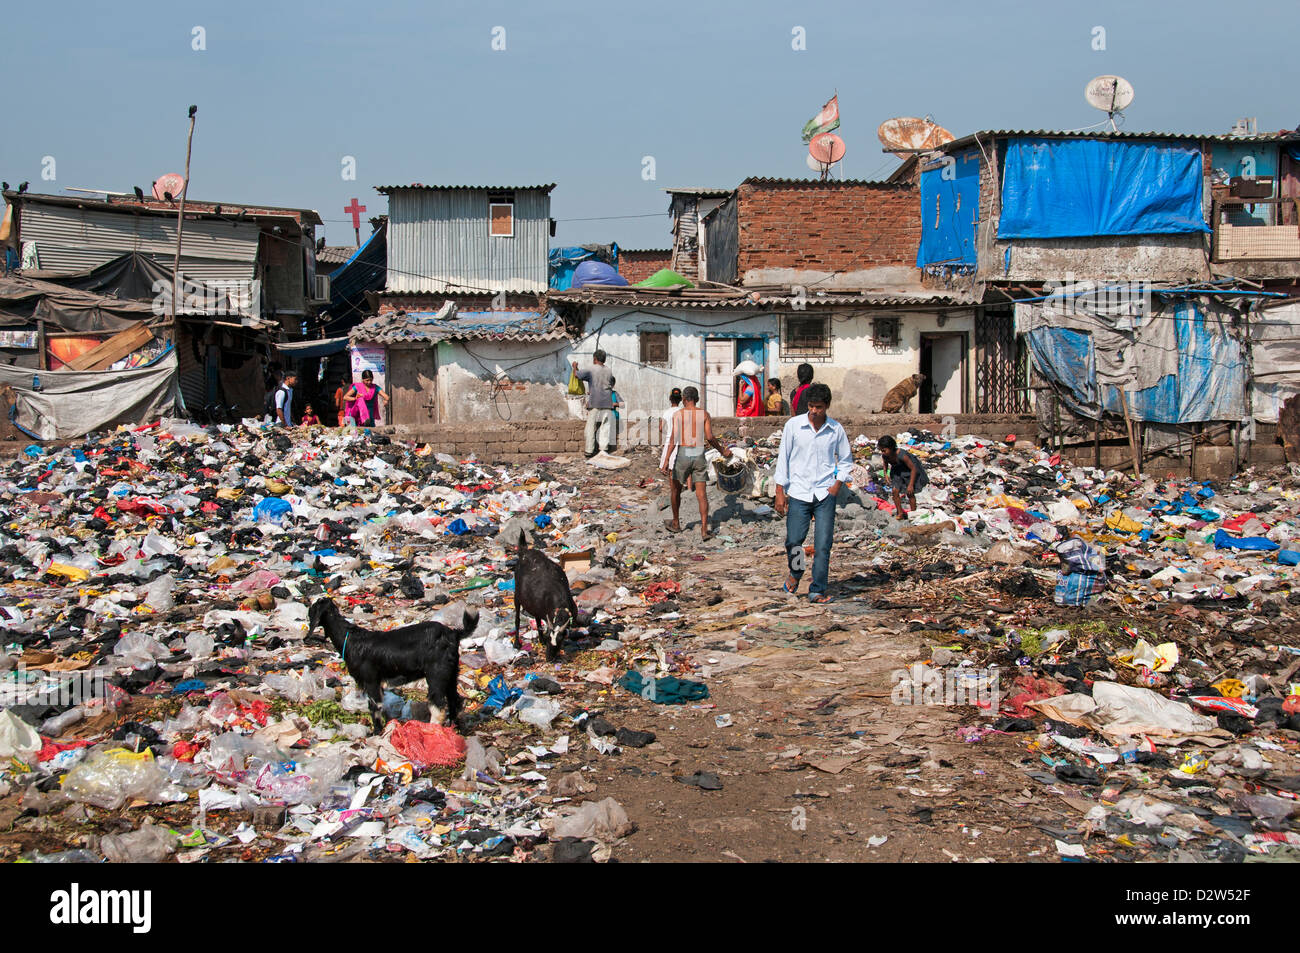 mumbai-dump-bombay-slum-near-colaba-and-world-trade-center-india-D2W52F.jpg